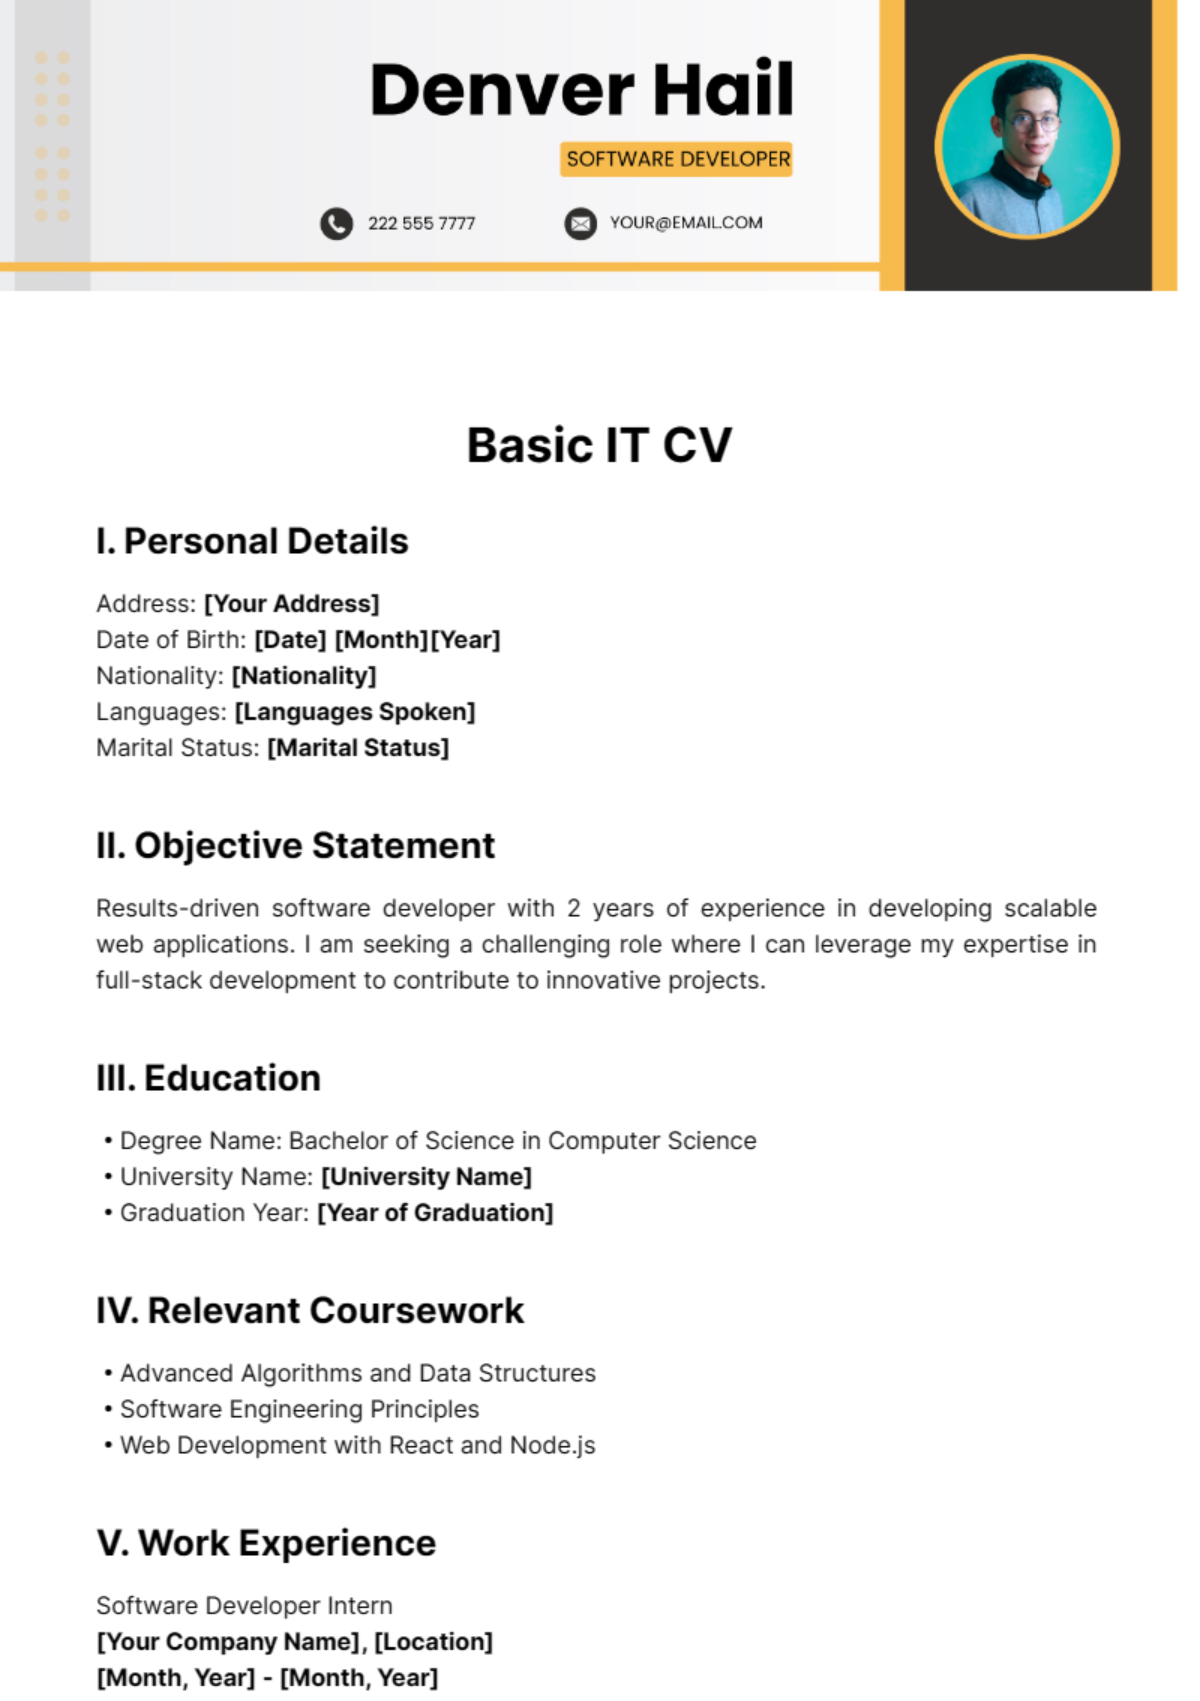 Basic IT CV Template